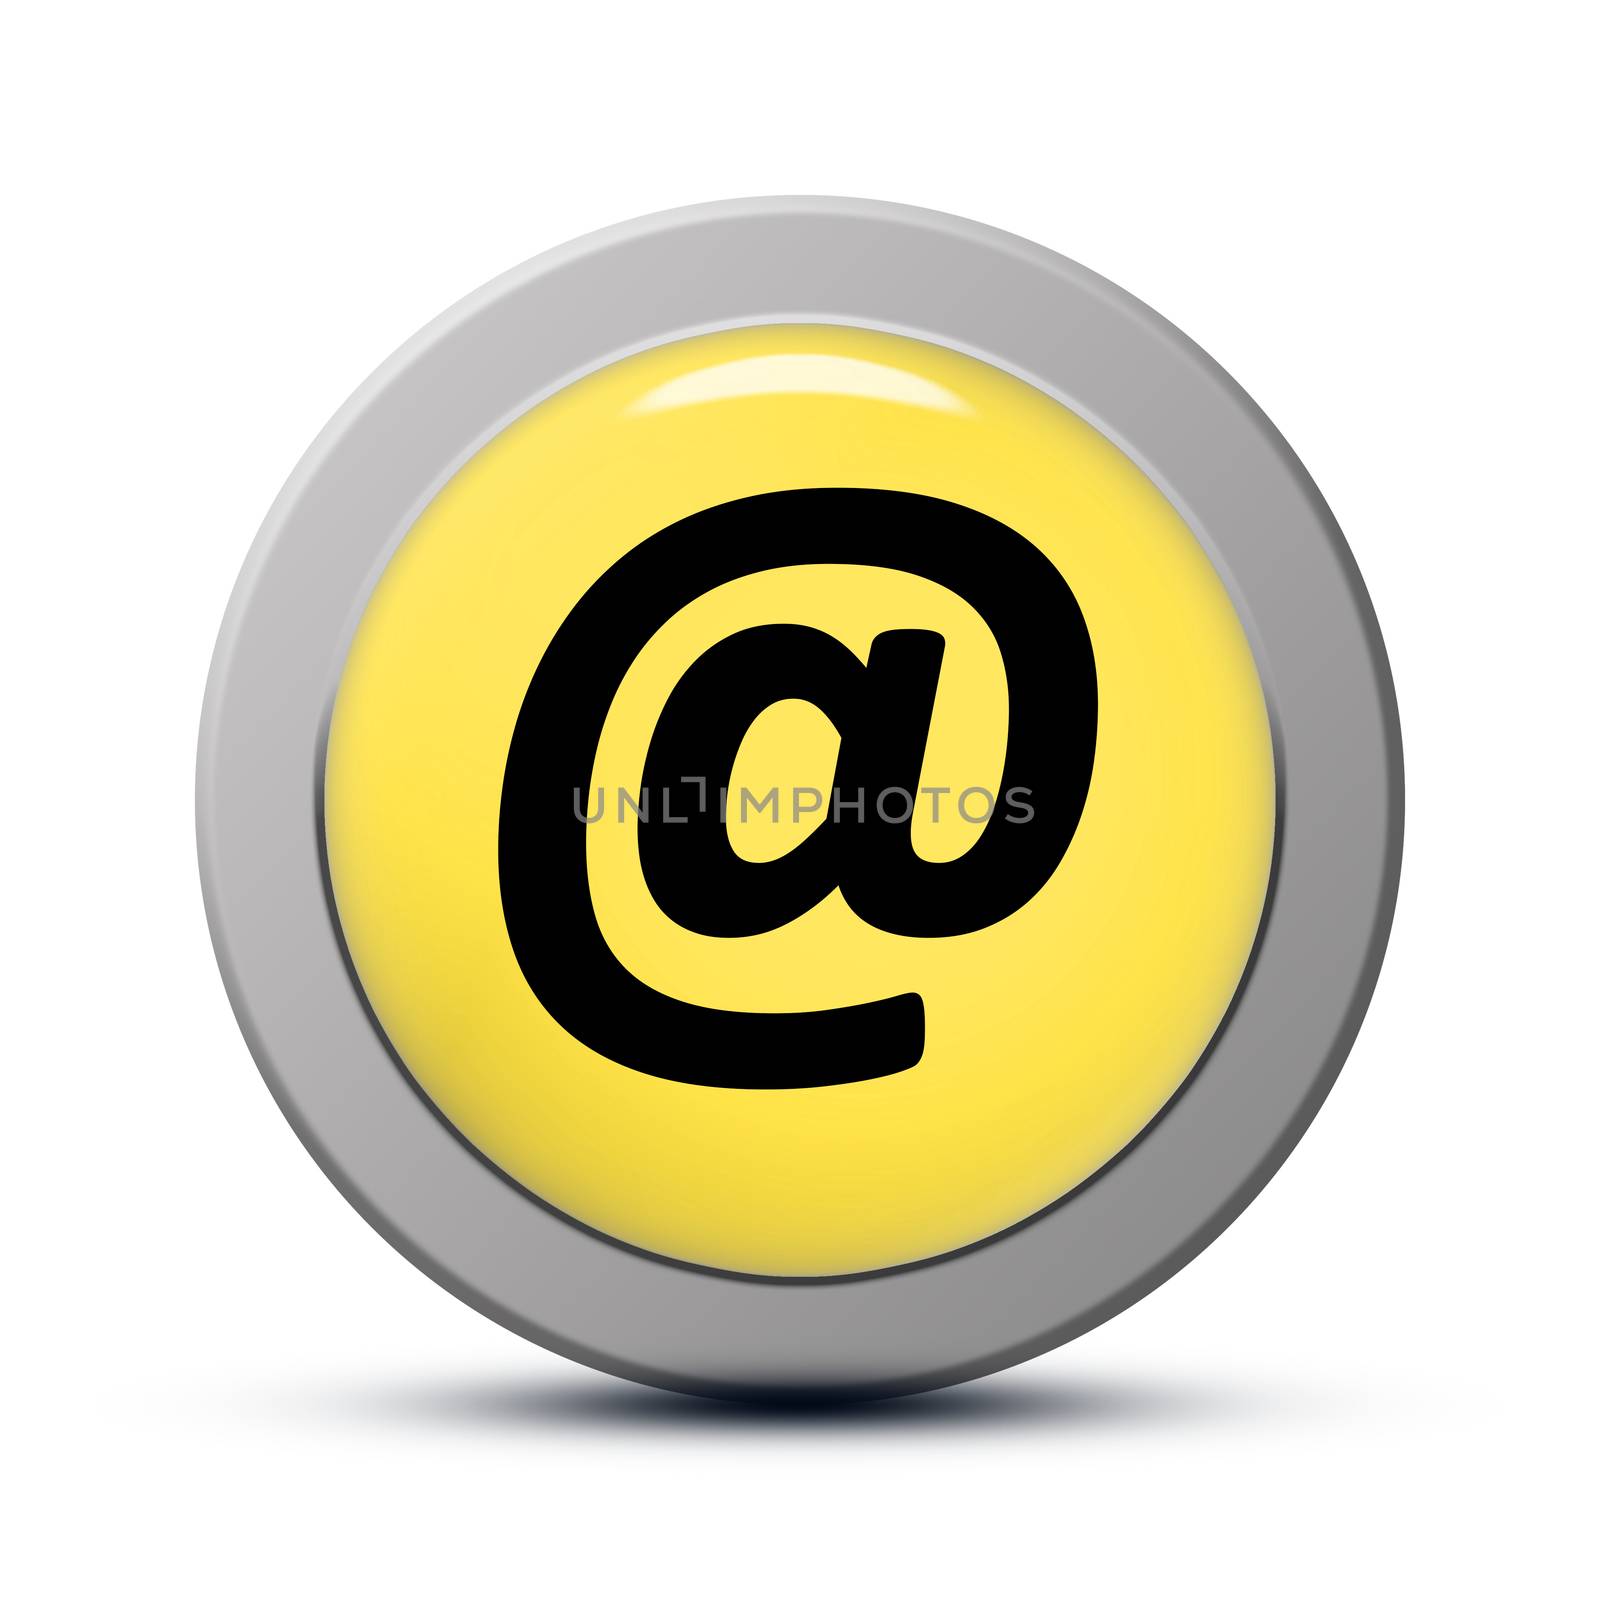 yellow round Icon series : Email address button